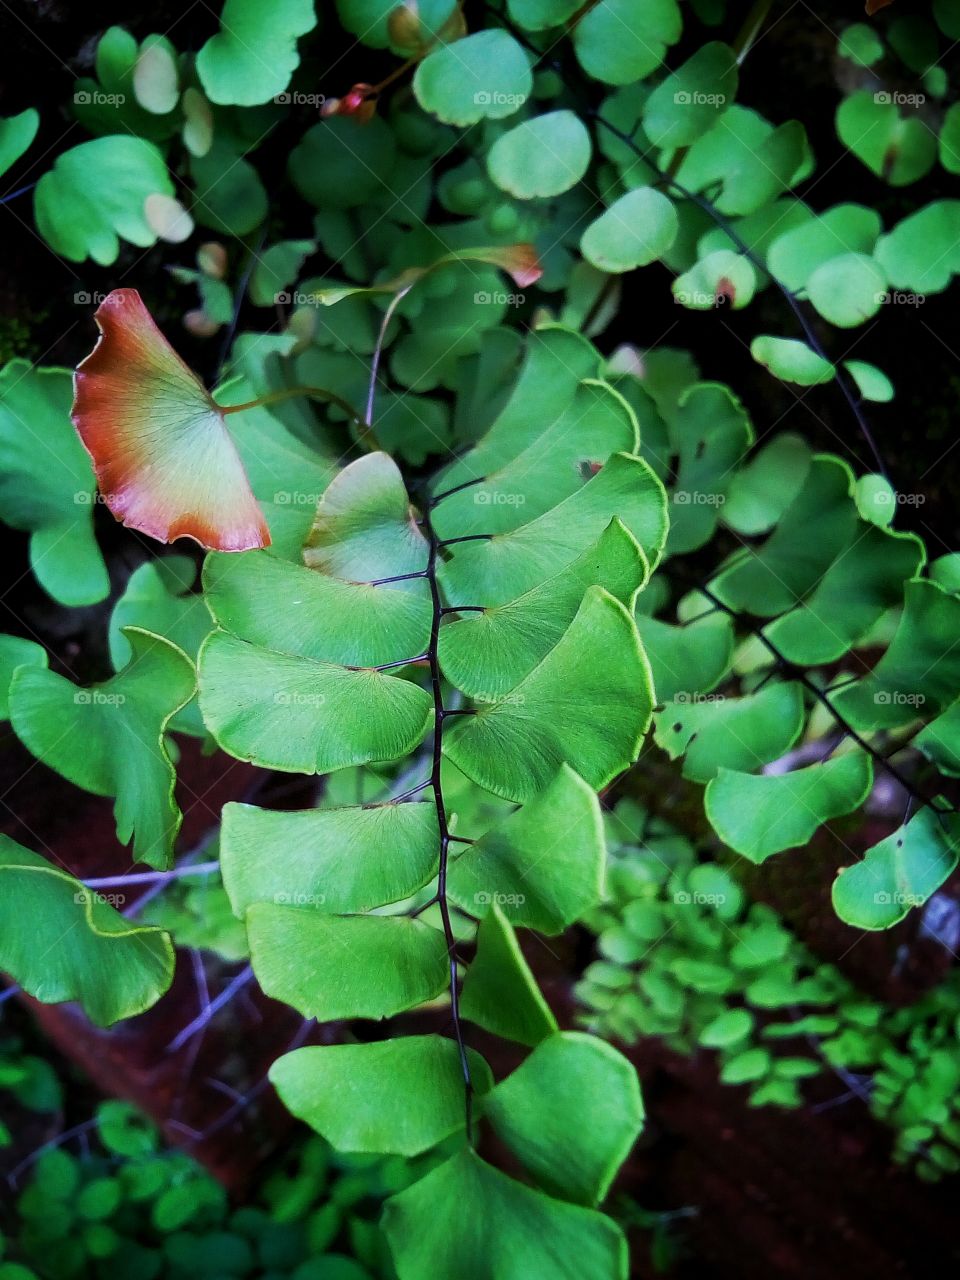 leaf's